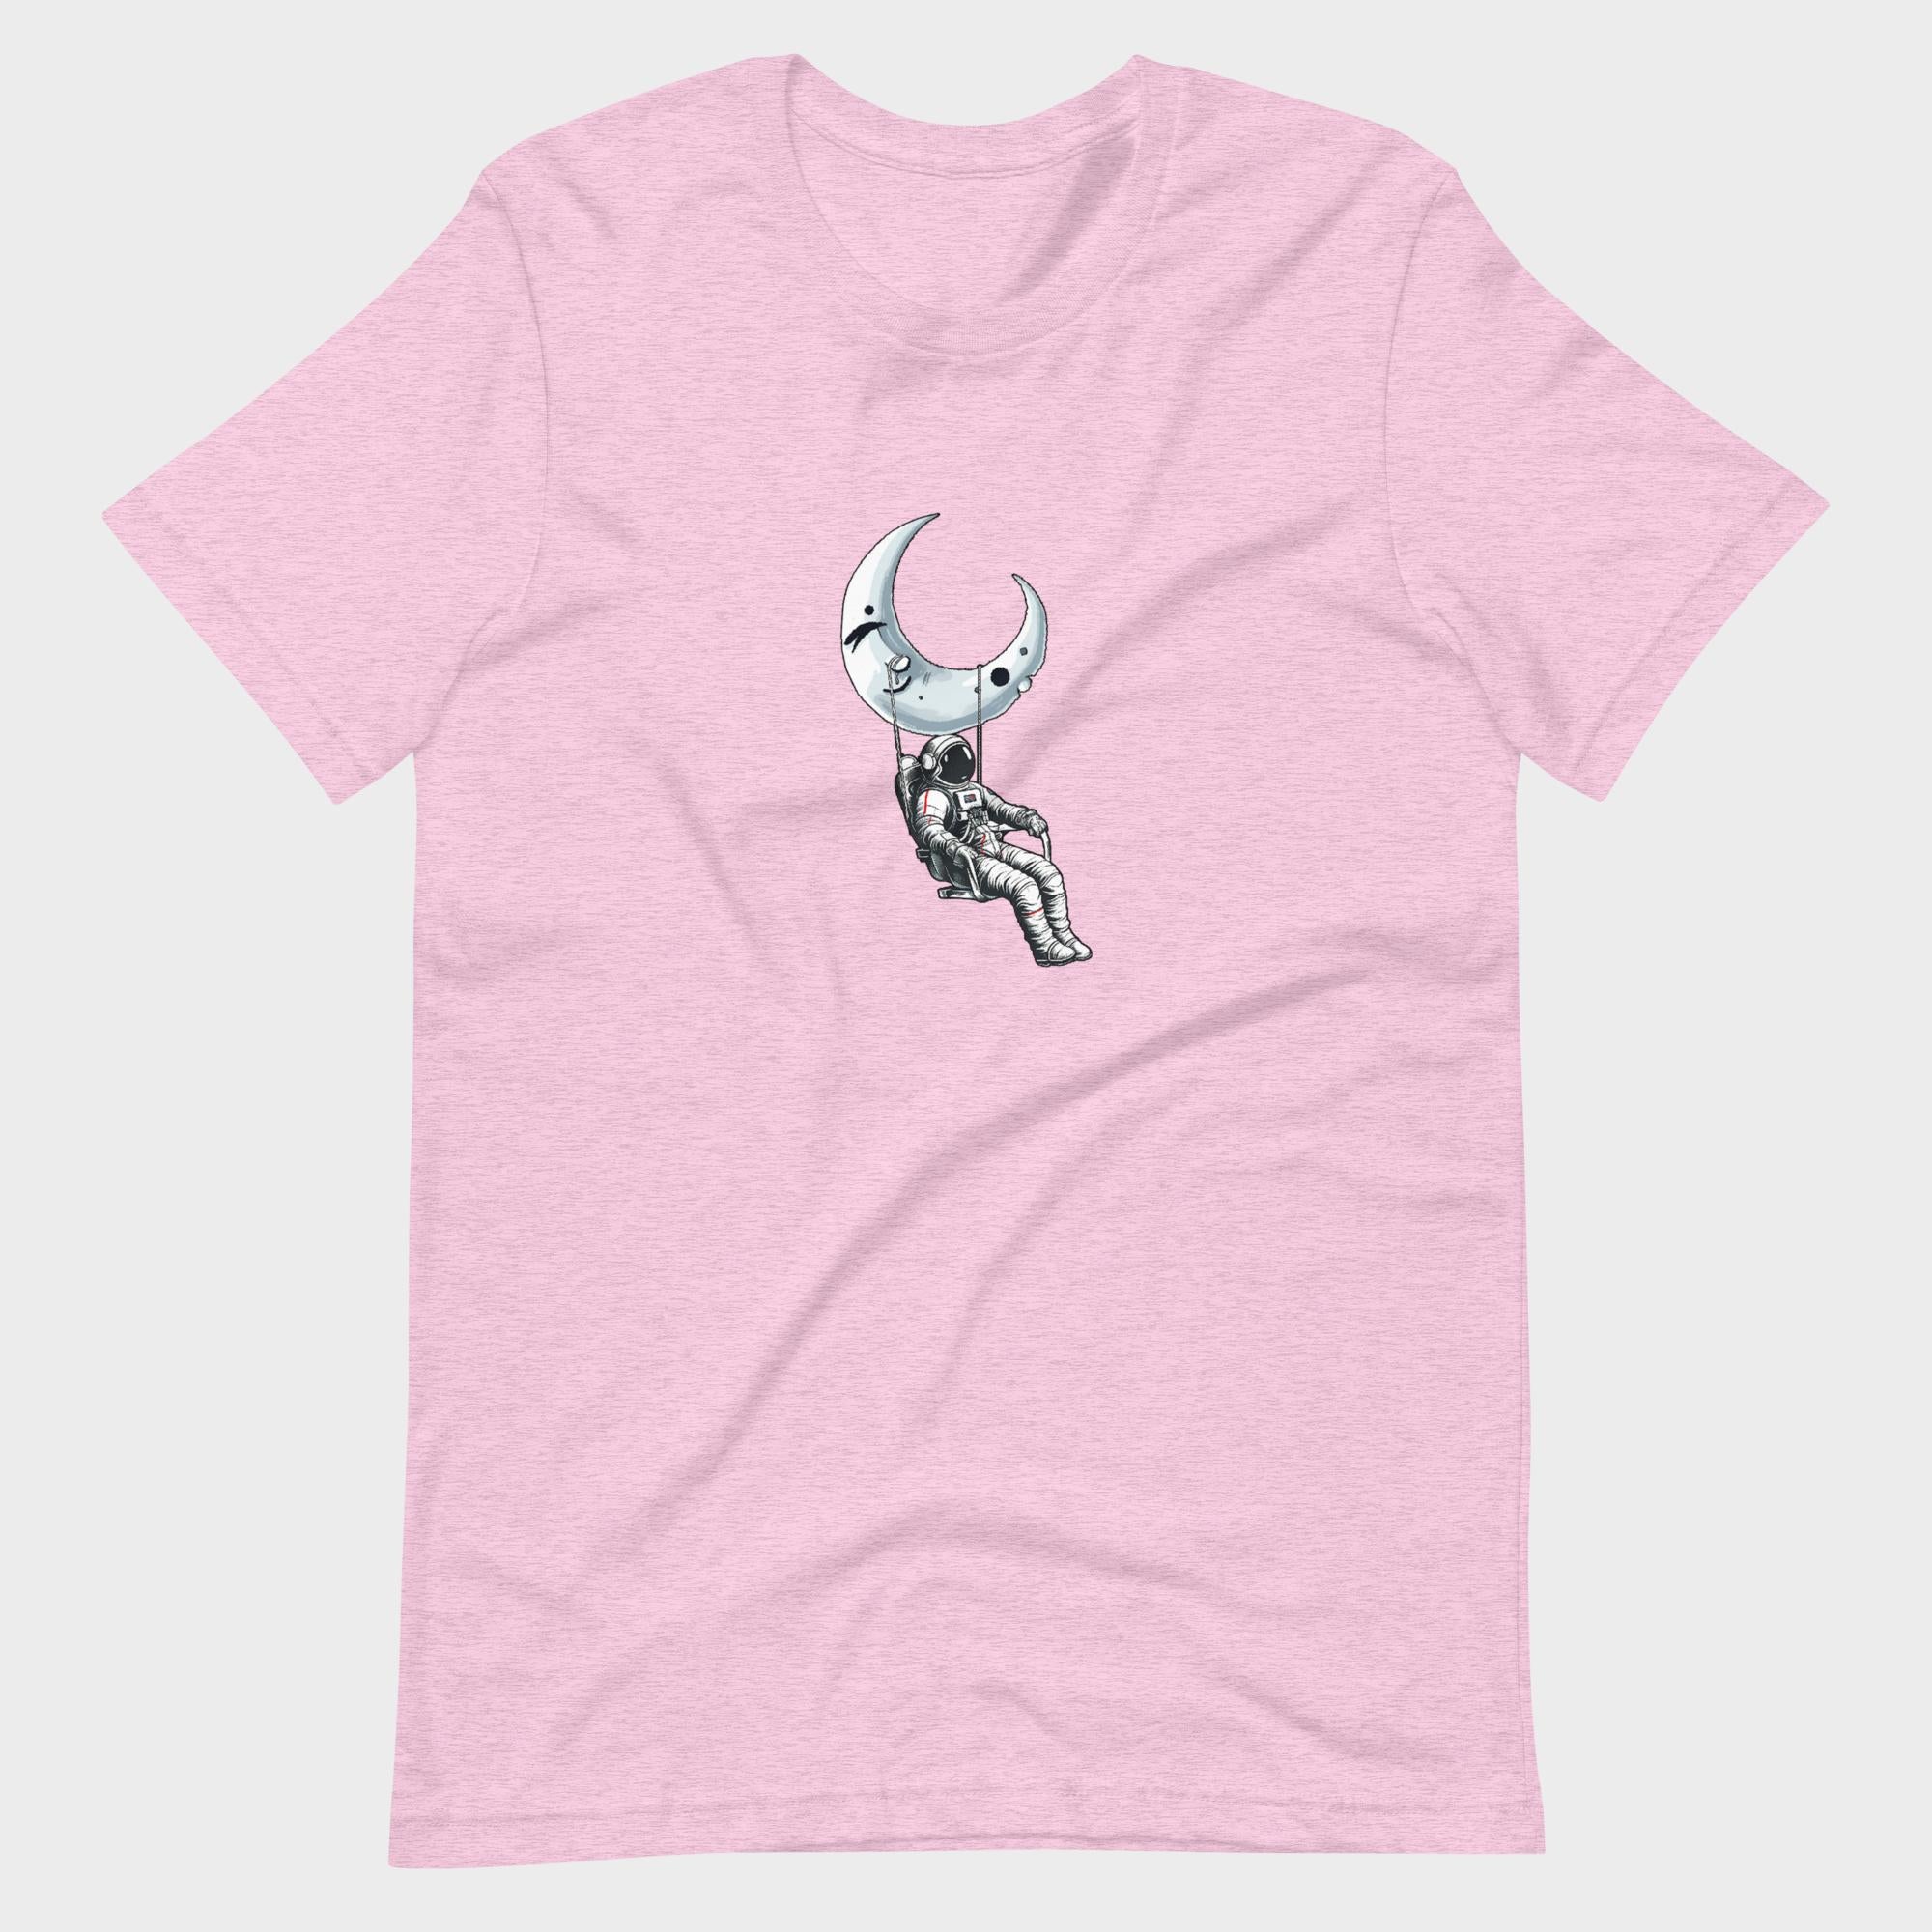 A Space Break - T-Shirt